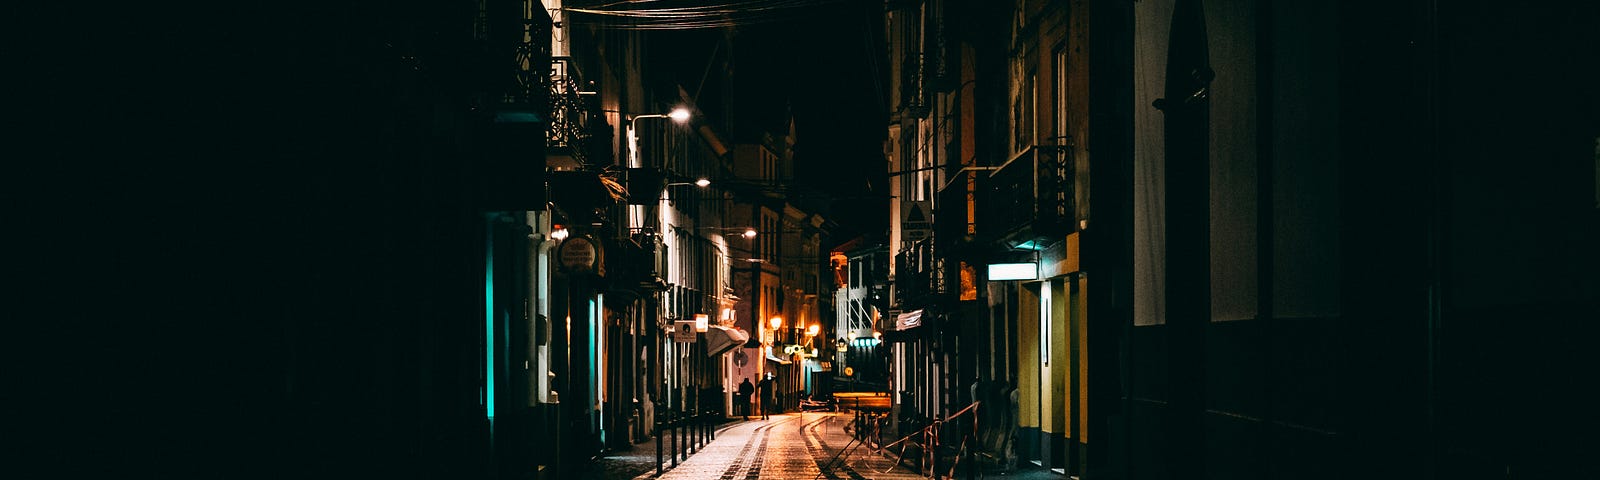 A dark alleyway at night, in the dark.